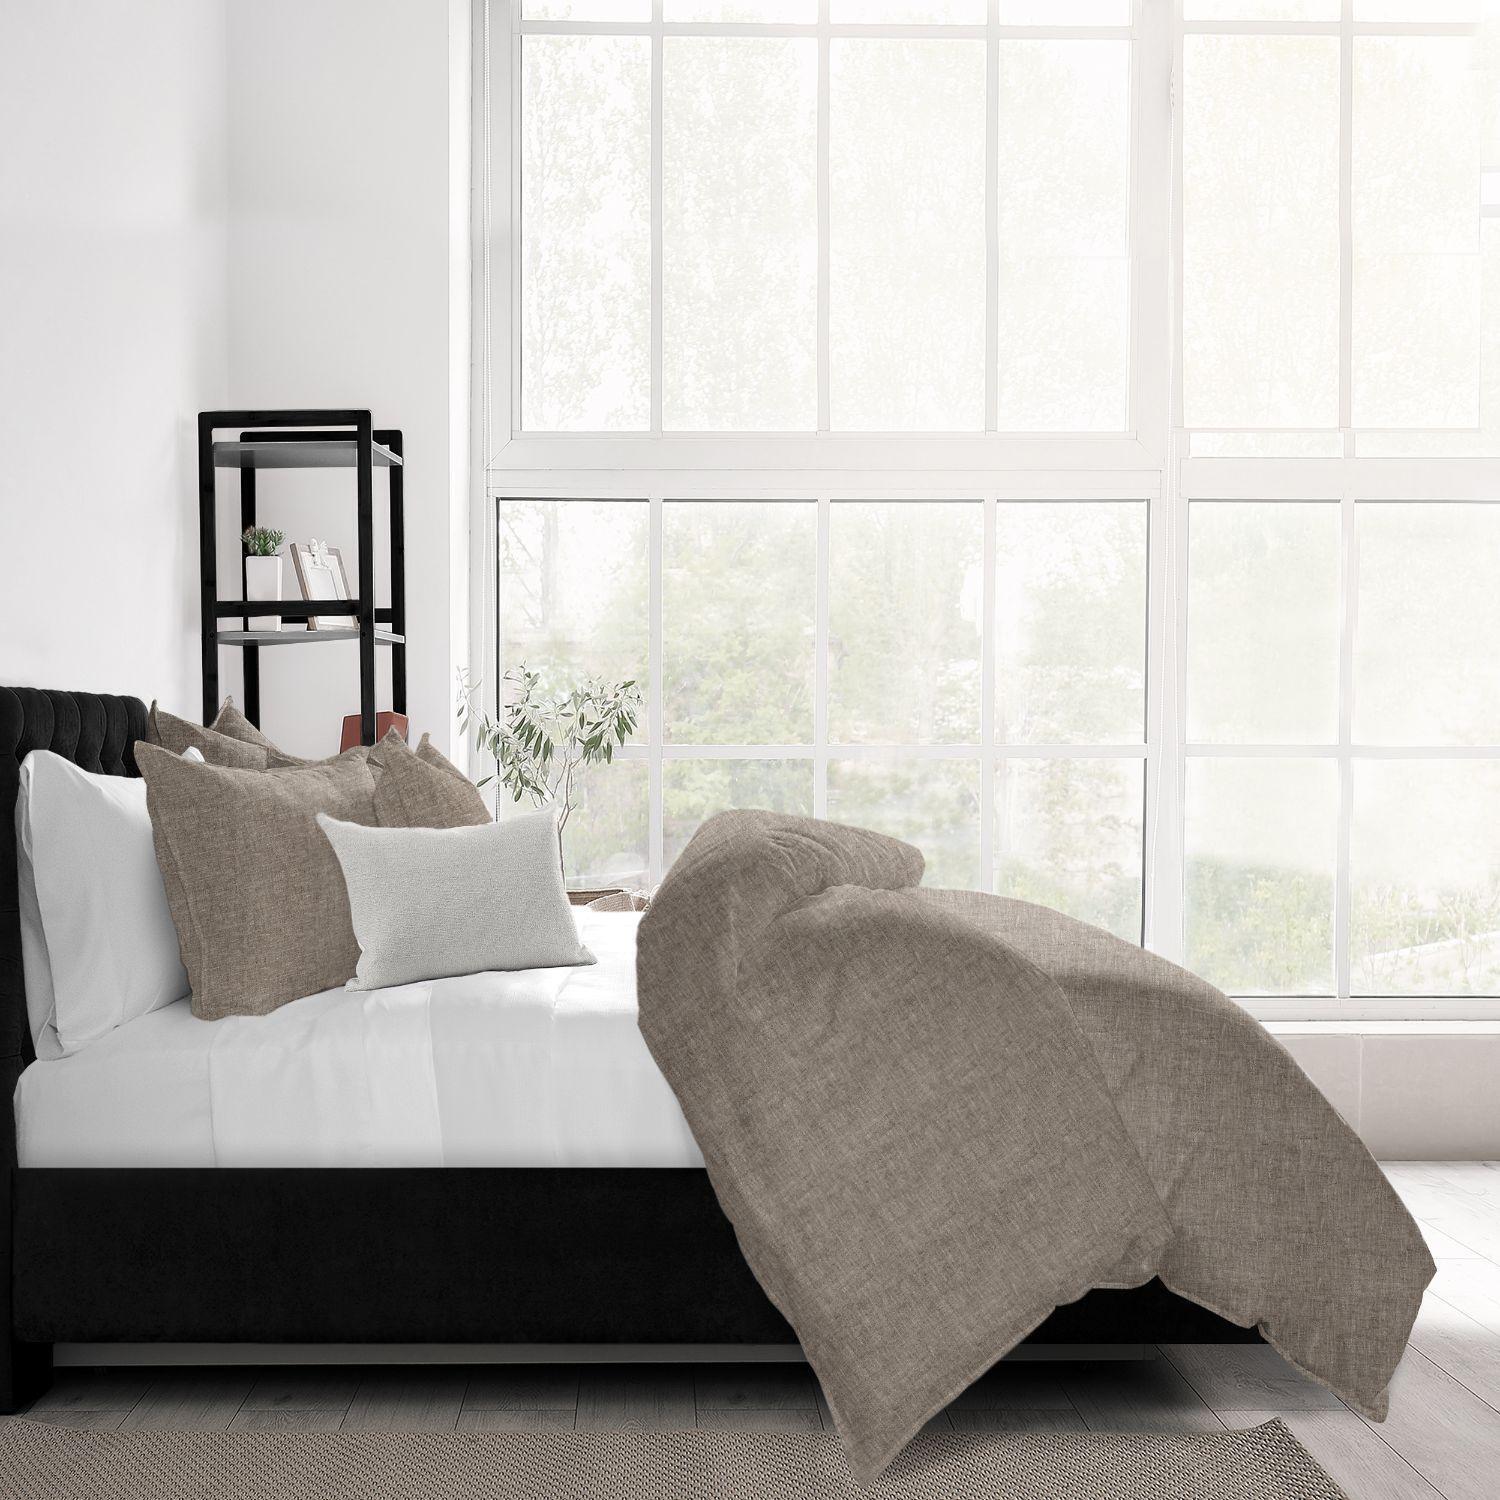 Set of 3 Natural Brown Solid Comforter with Pillow Shams - Super King alternate image